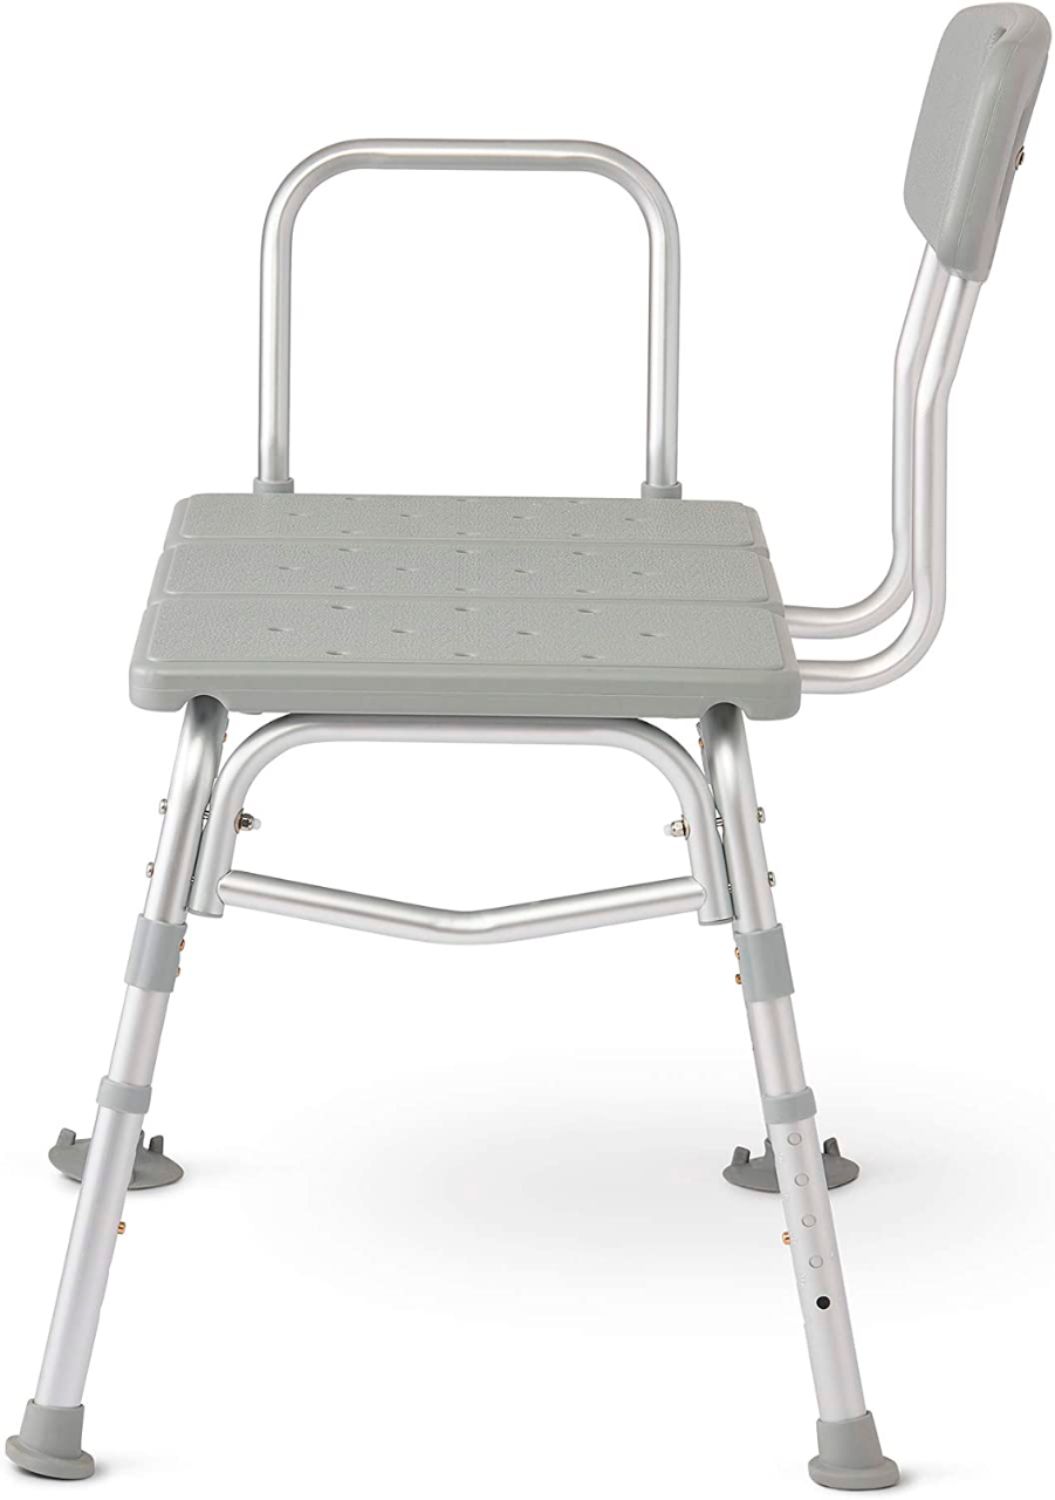 Adjustable Bathtub Seat 6 Height Bath Shower Transfer Bench Stool with Non-Slip Leg Pad HEALIFTY Shower Chair 